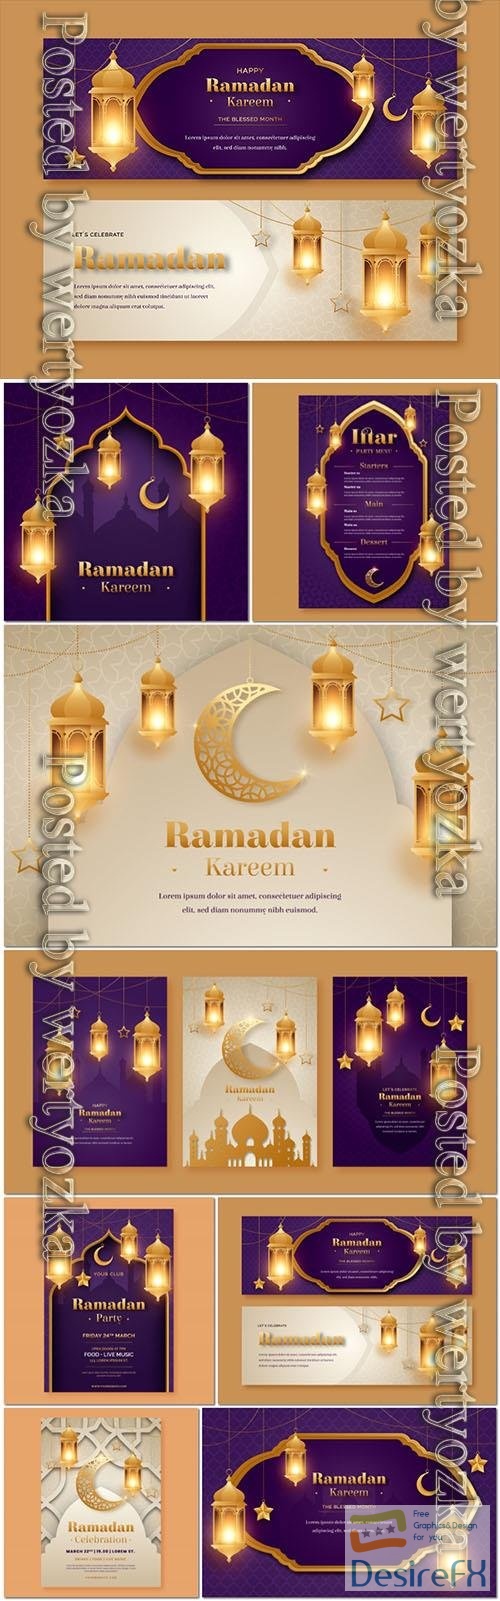 Vector flat illustration for ramadan celebration